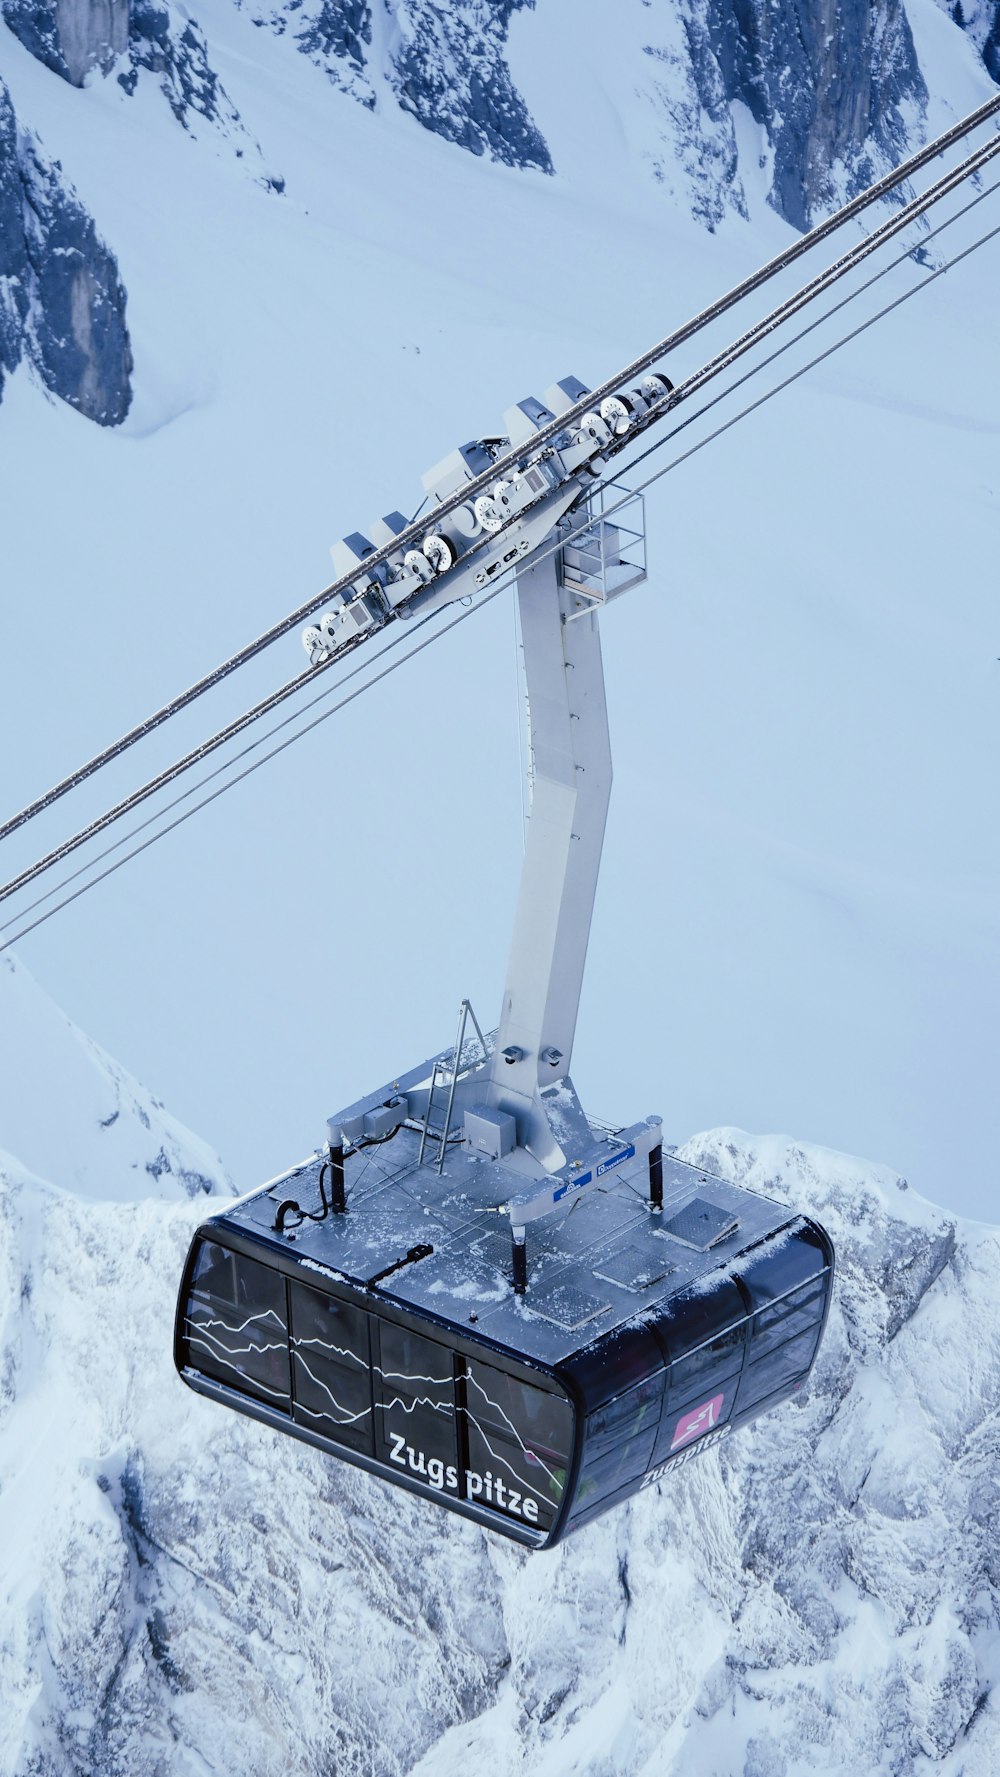 a ski lift in the snow